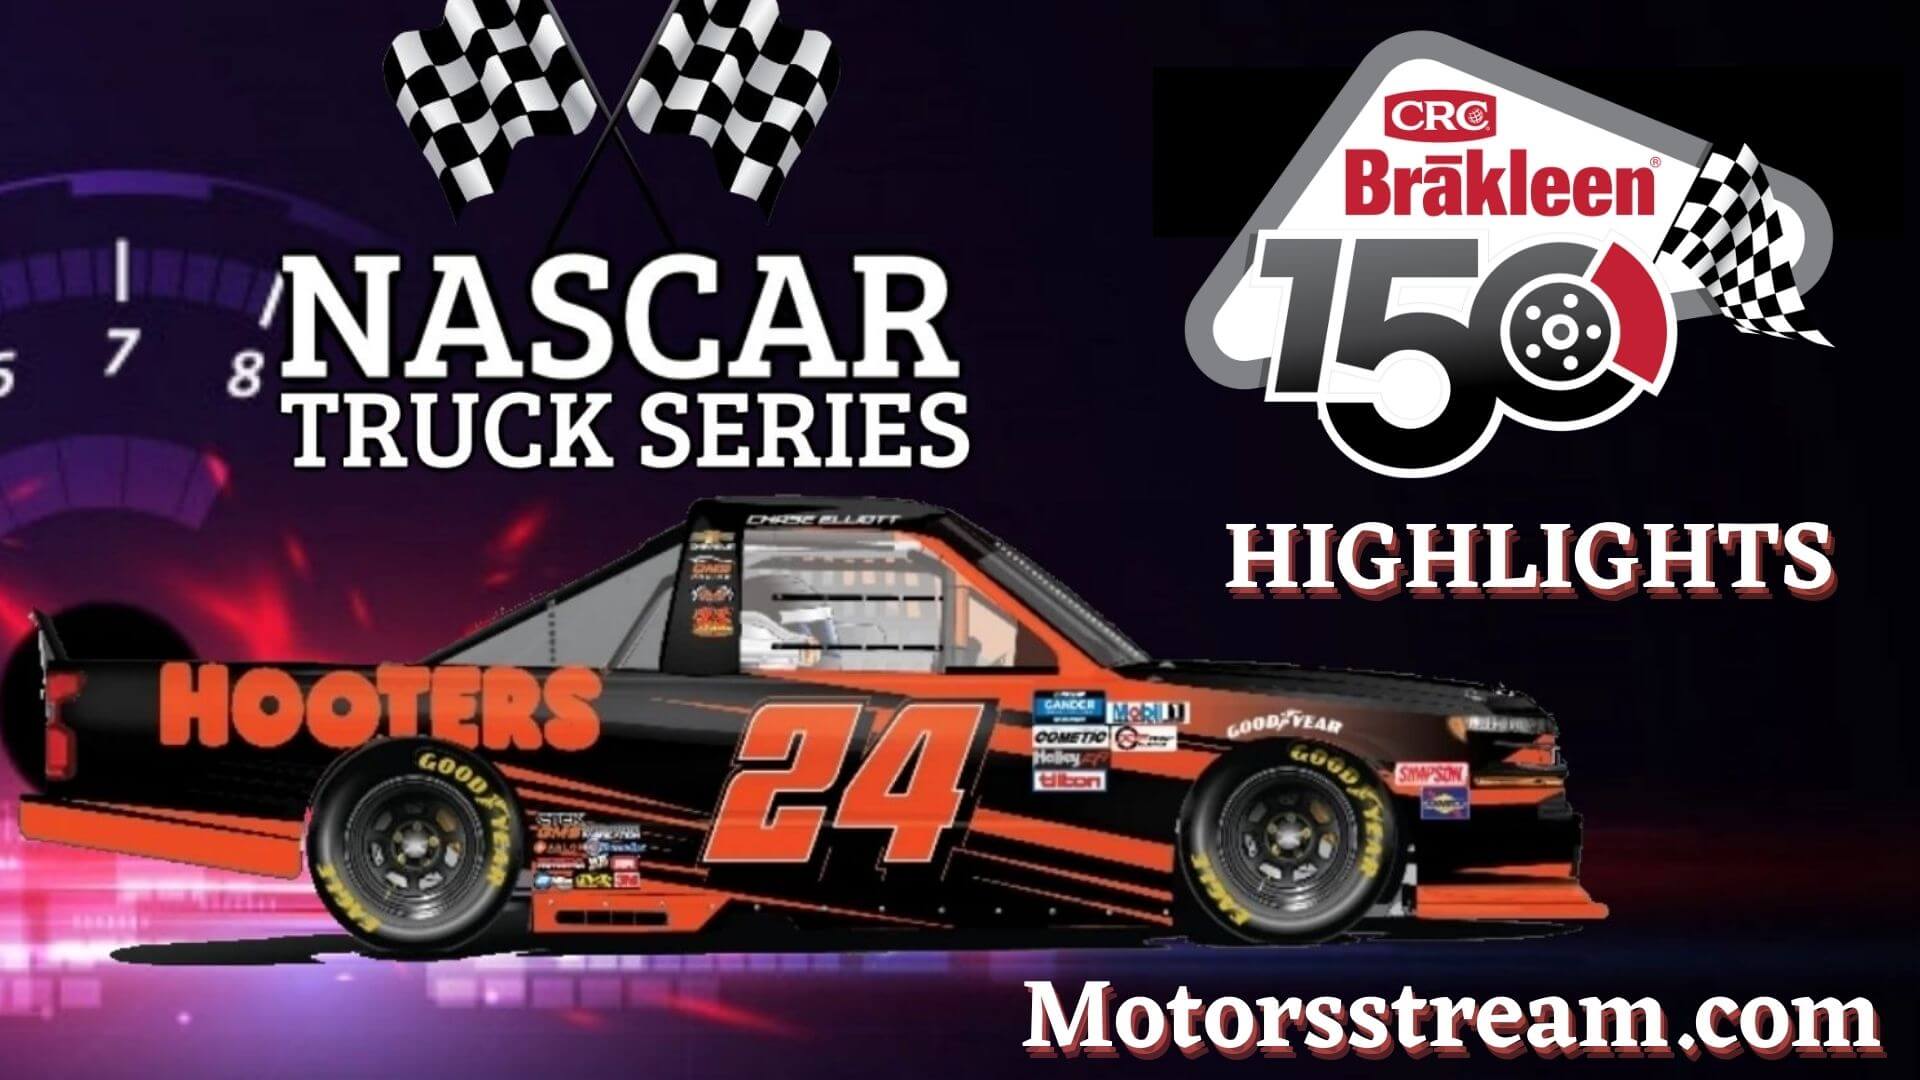 NASCAR CRC Brakleen 150 Highlights 2021 Truck Series